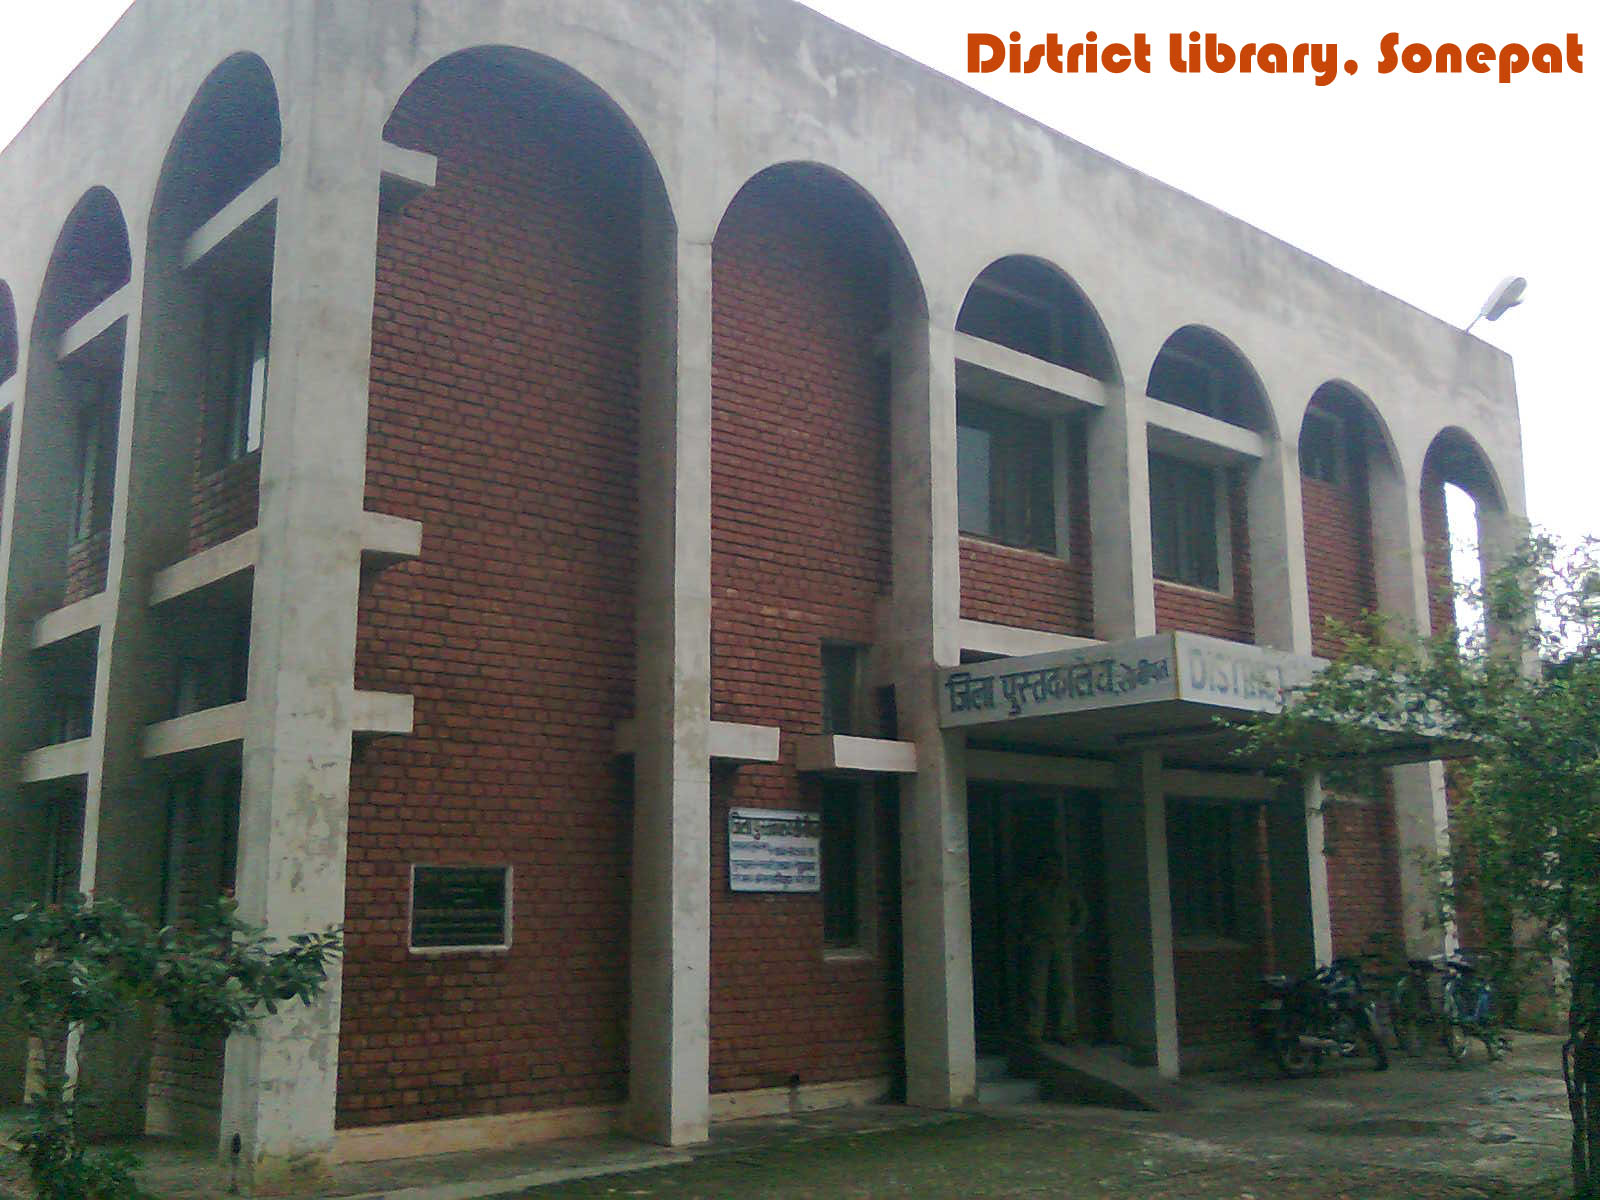 District Library, Sonepat